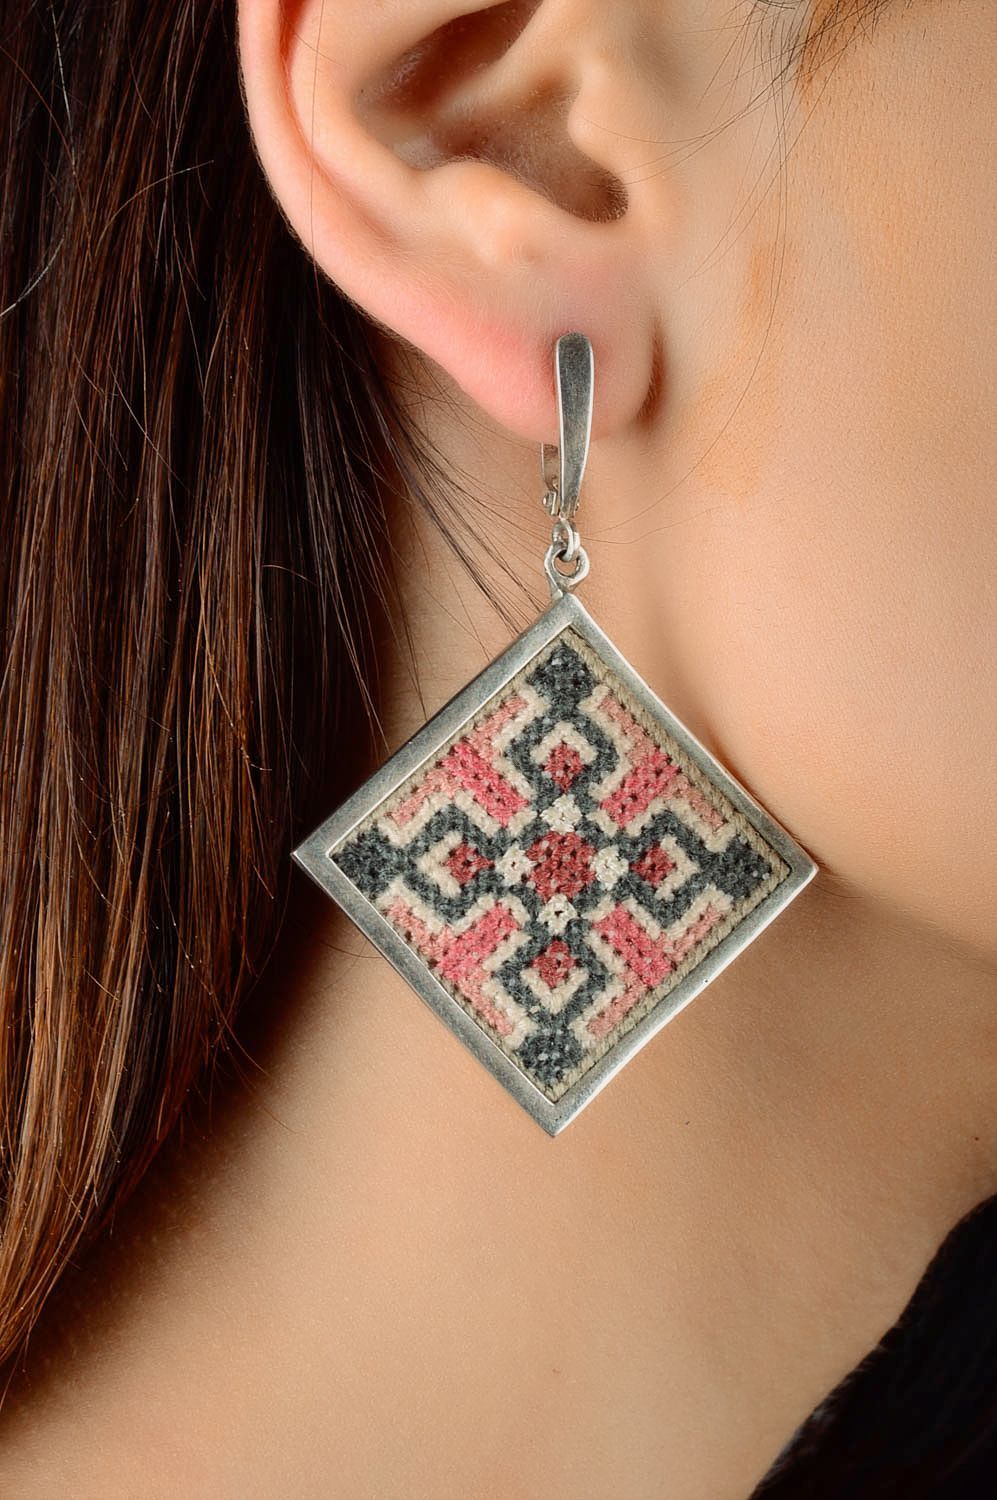 Handmade earrings in ethnic style stylish designer accessory unusual earrings photo 3